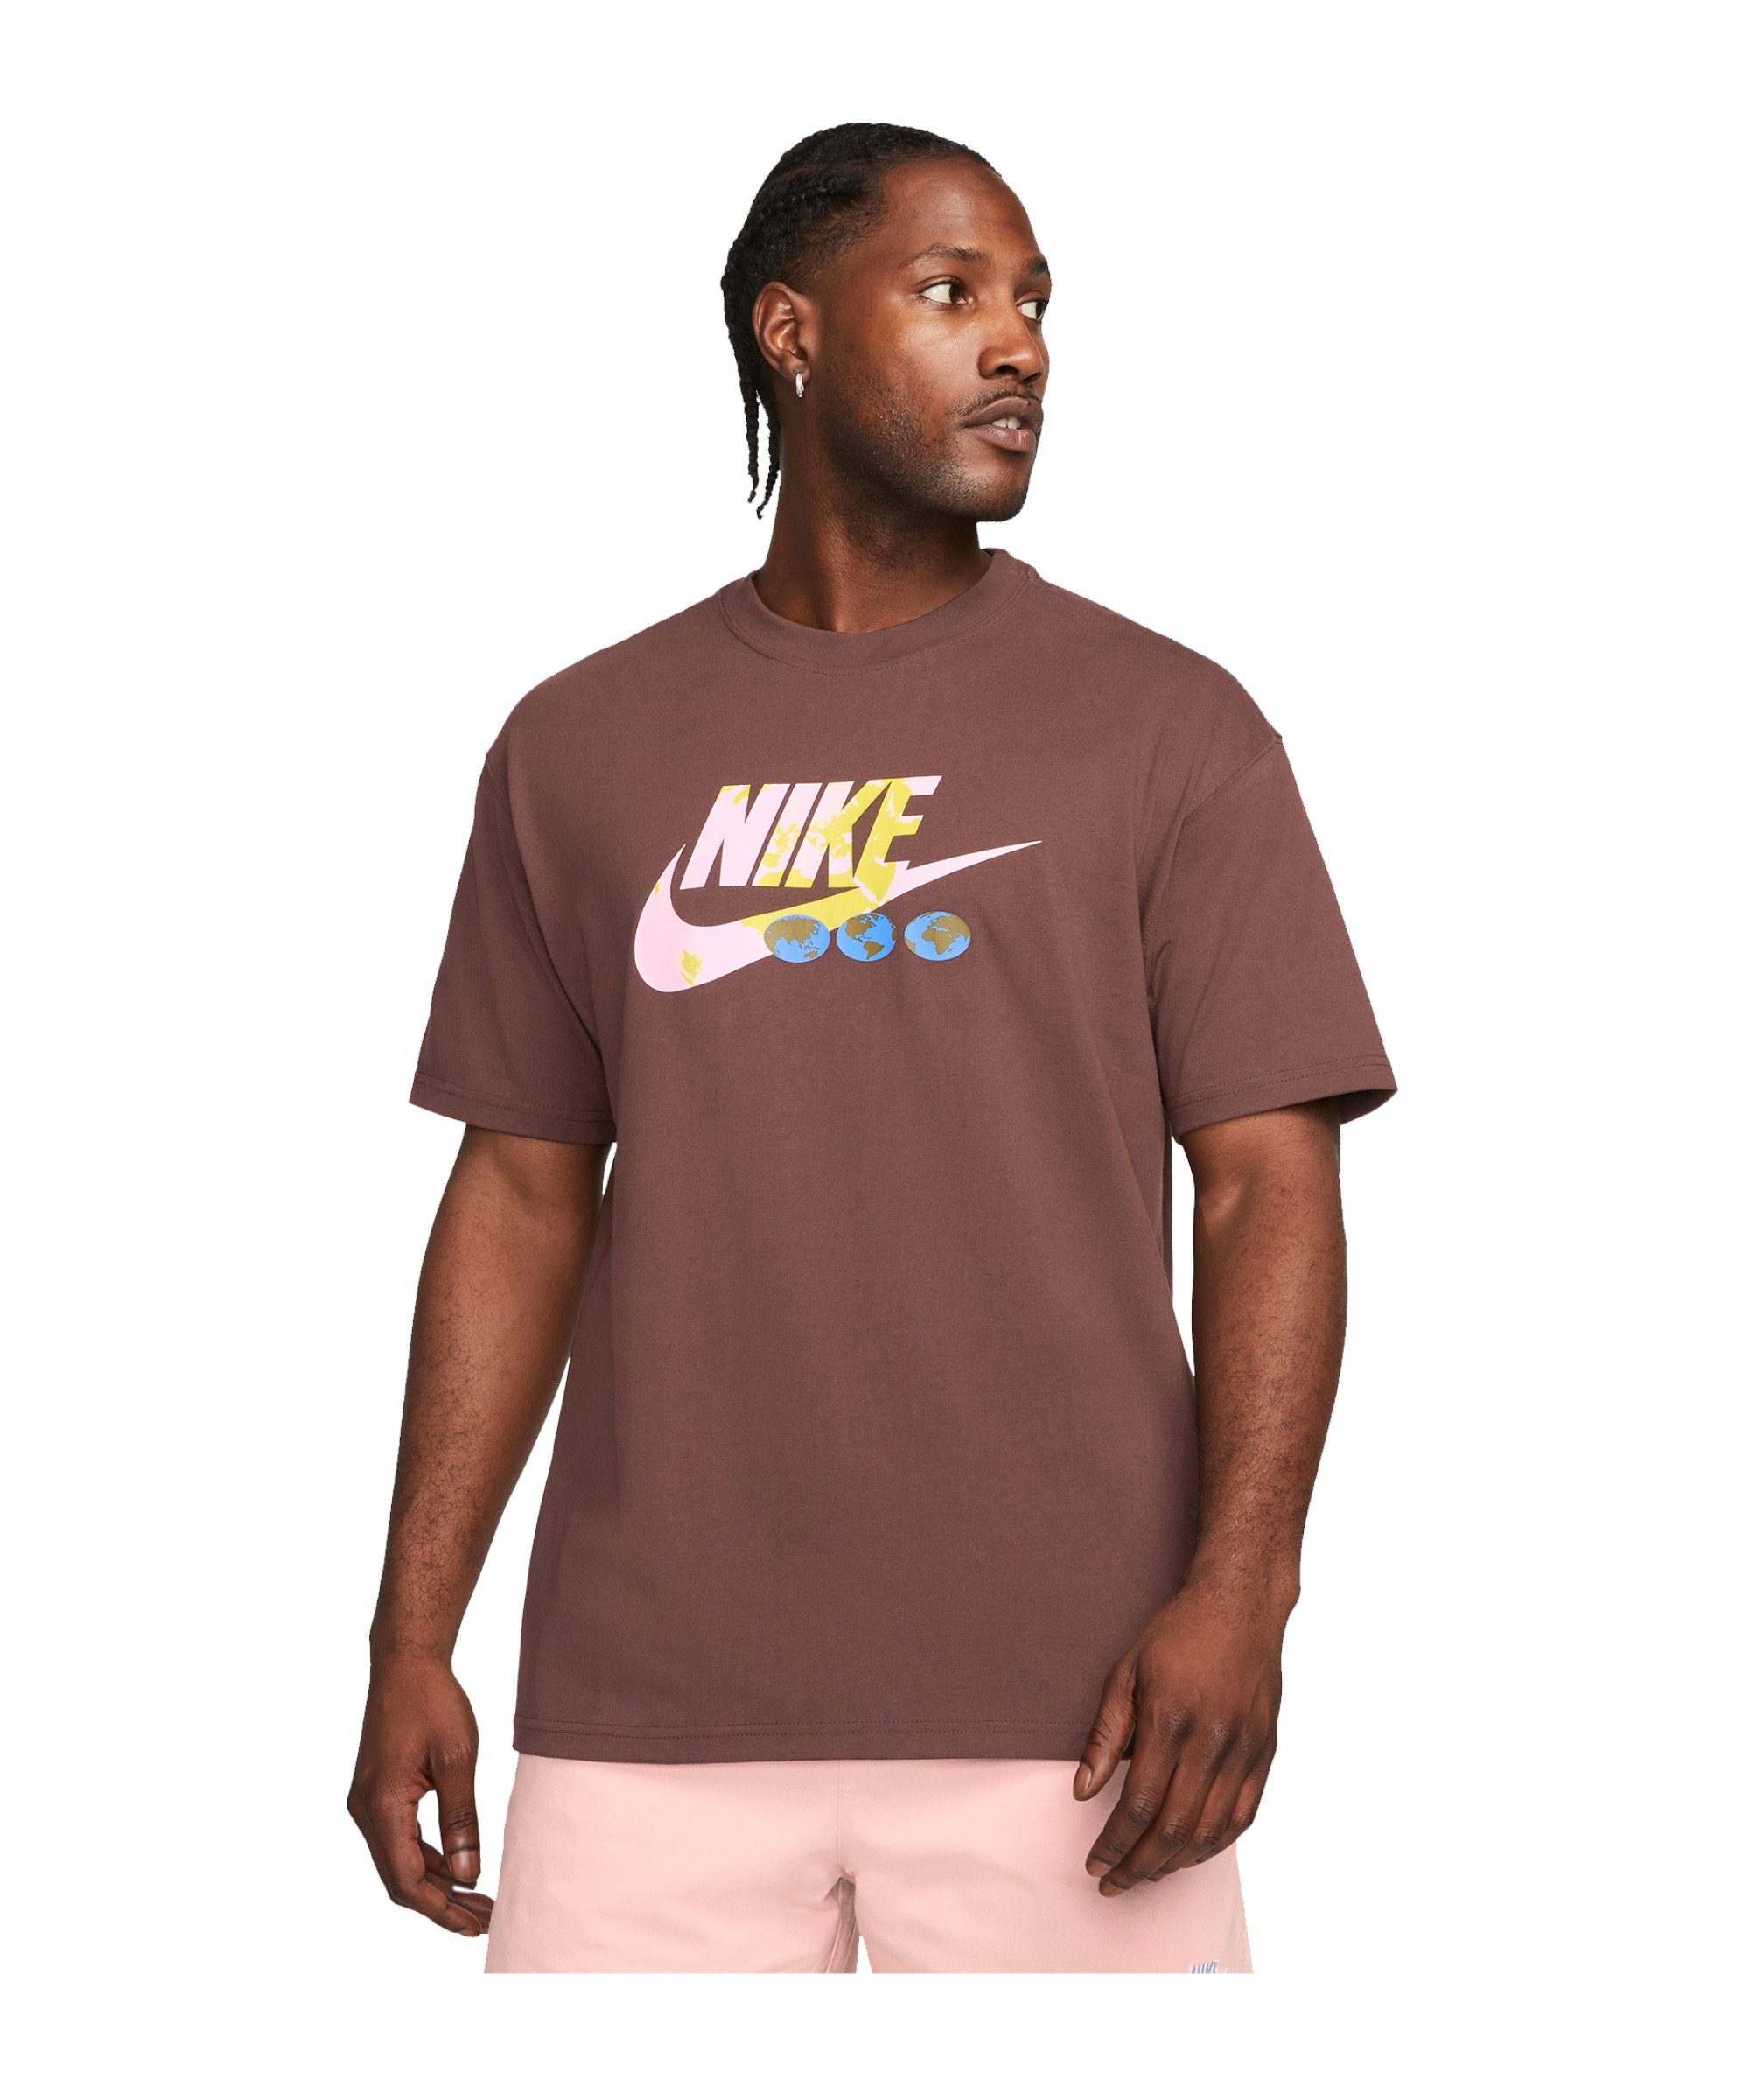 Nike Sportswear T-Shirt T-Shirt Beige default braun